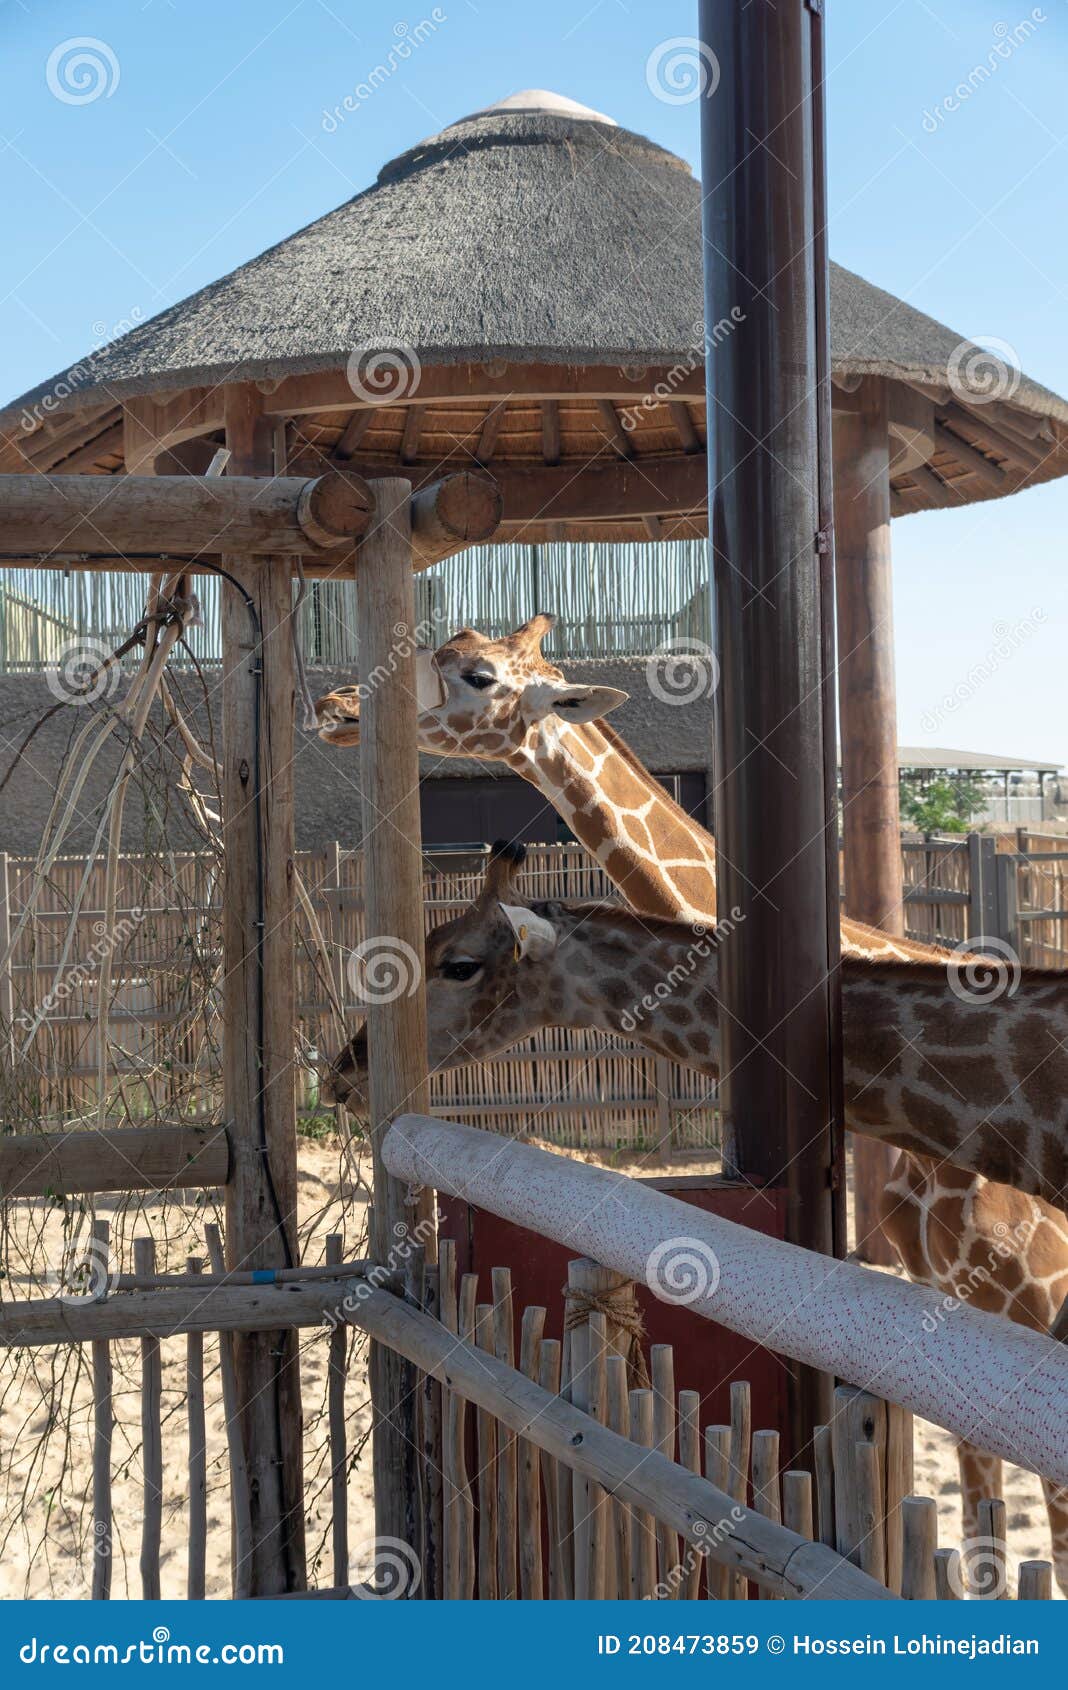 dubai safari park animal feeding